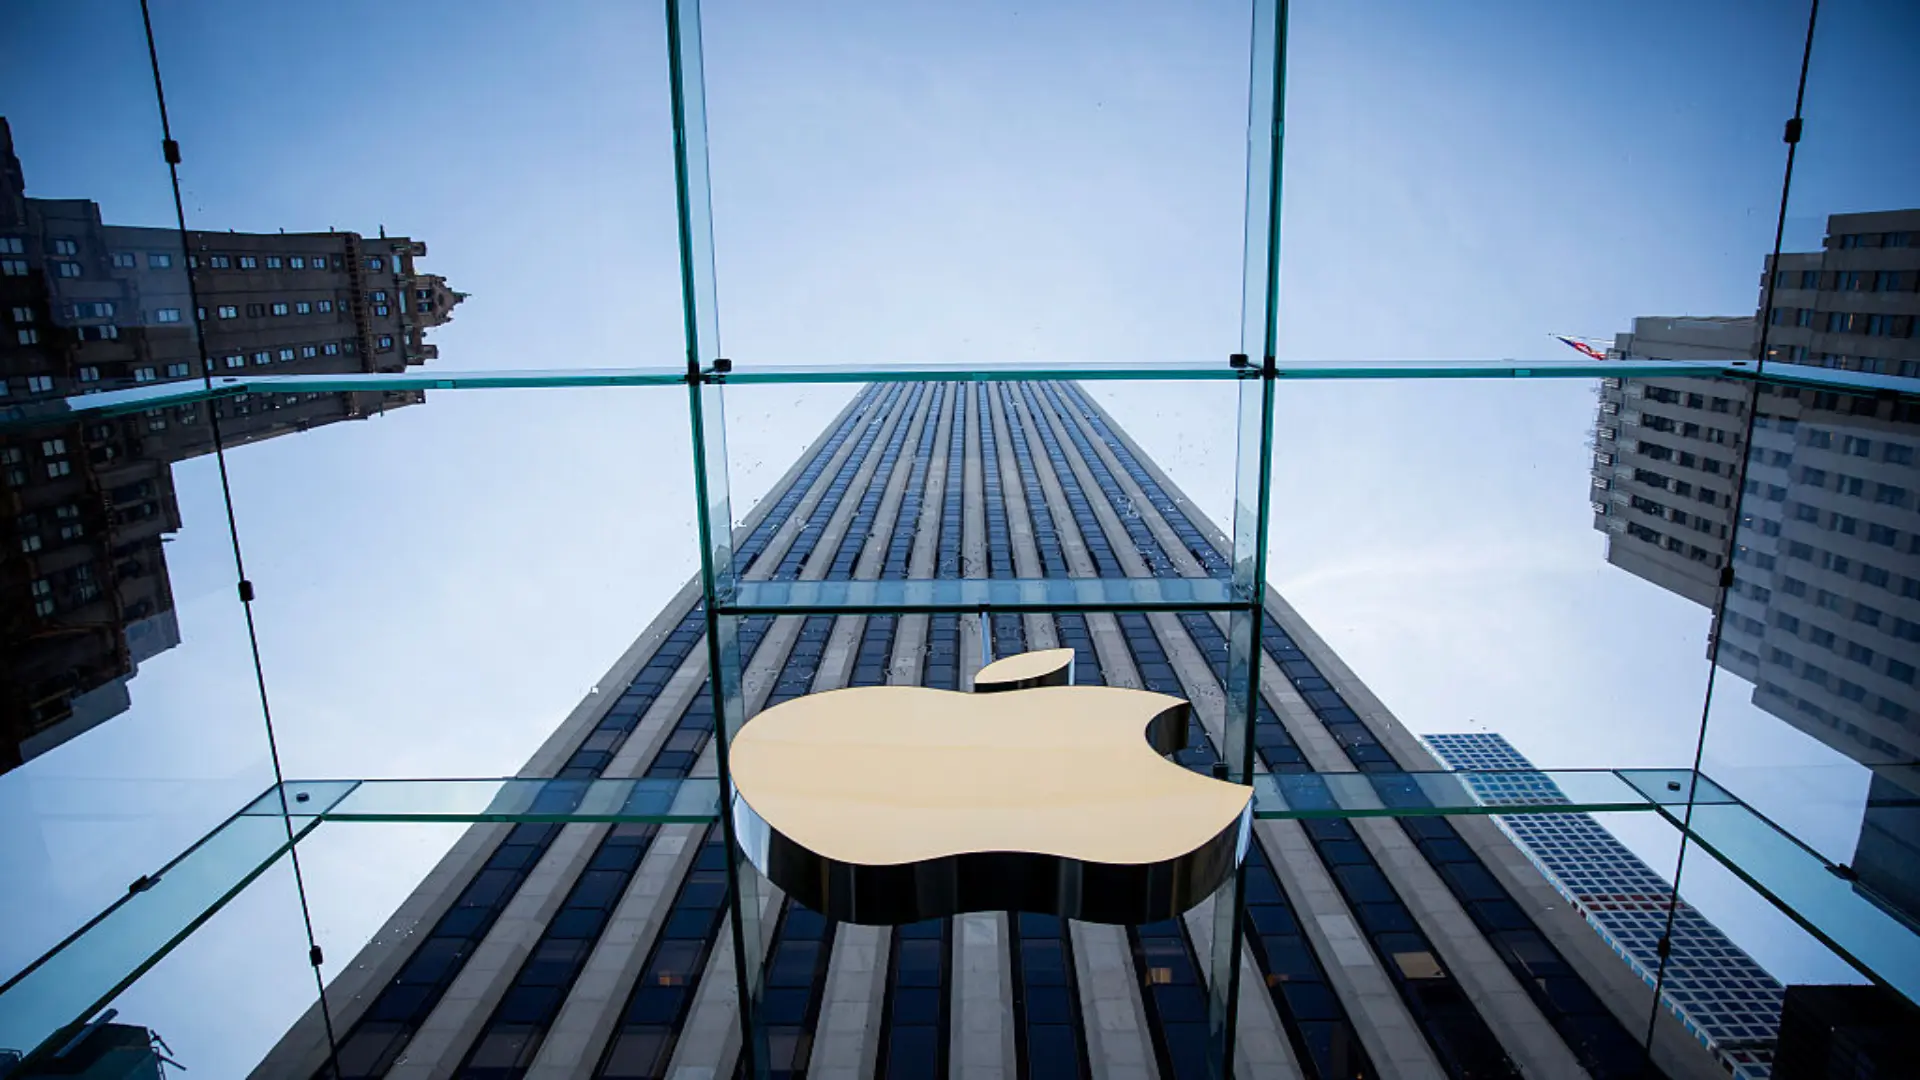 Apple faces employee, shareholder backlash over donation policies linked to Israeli settlements